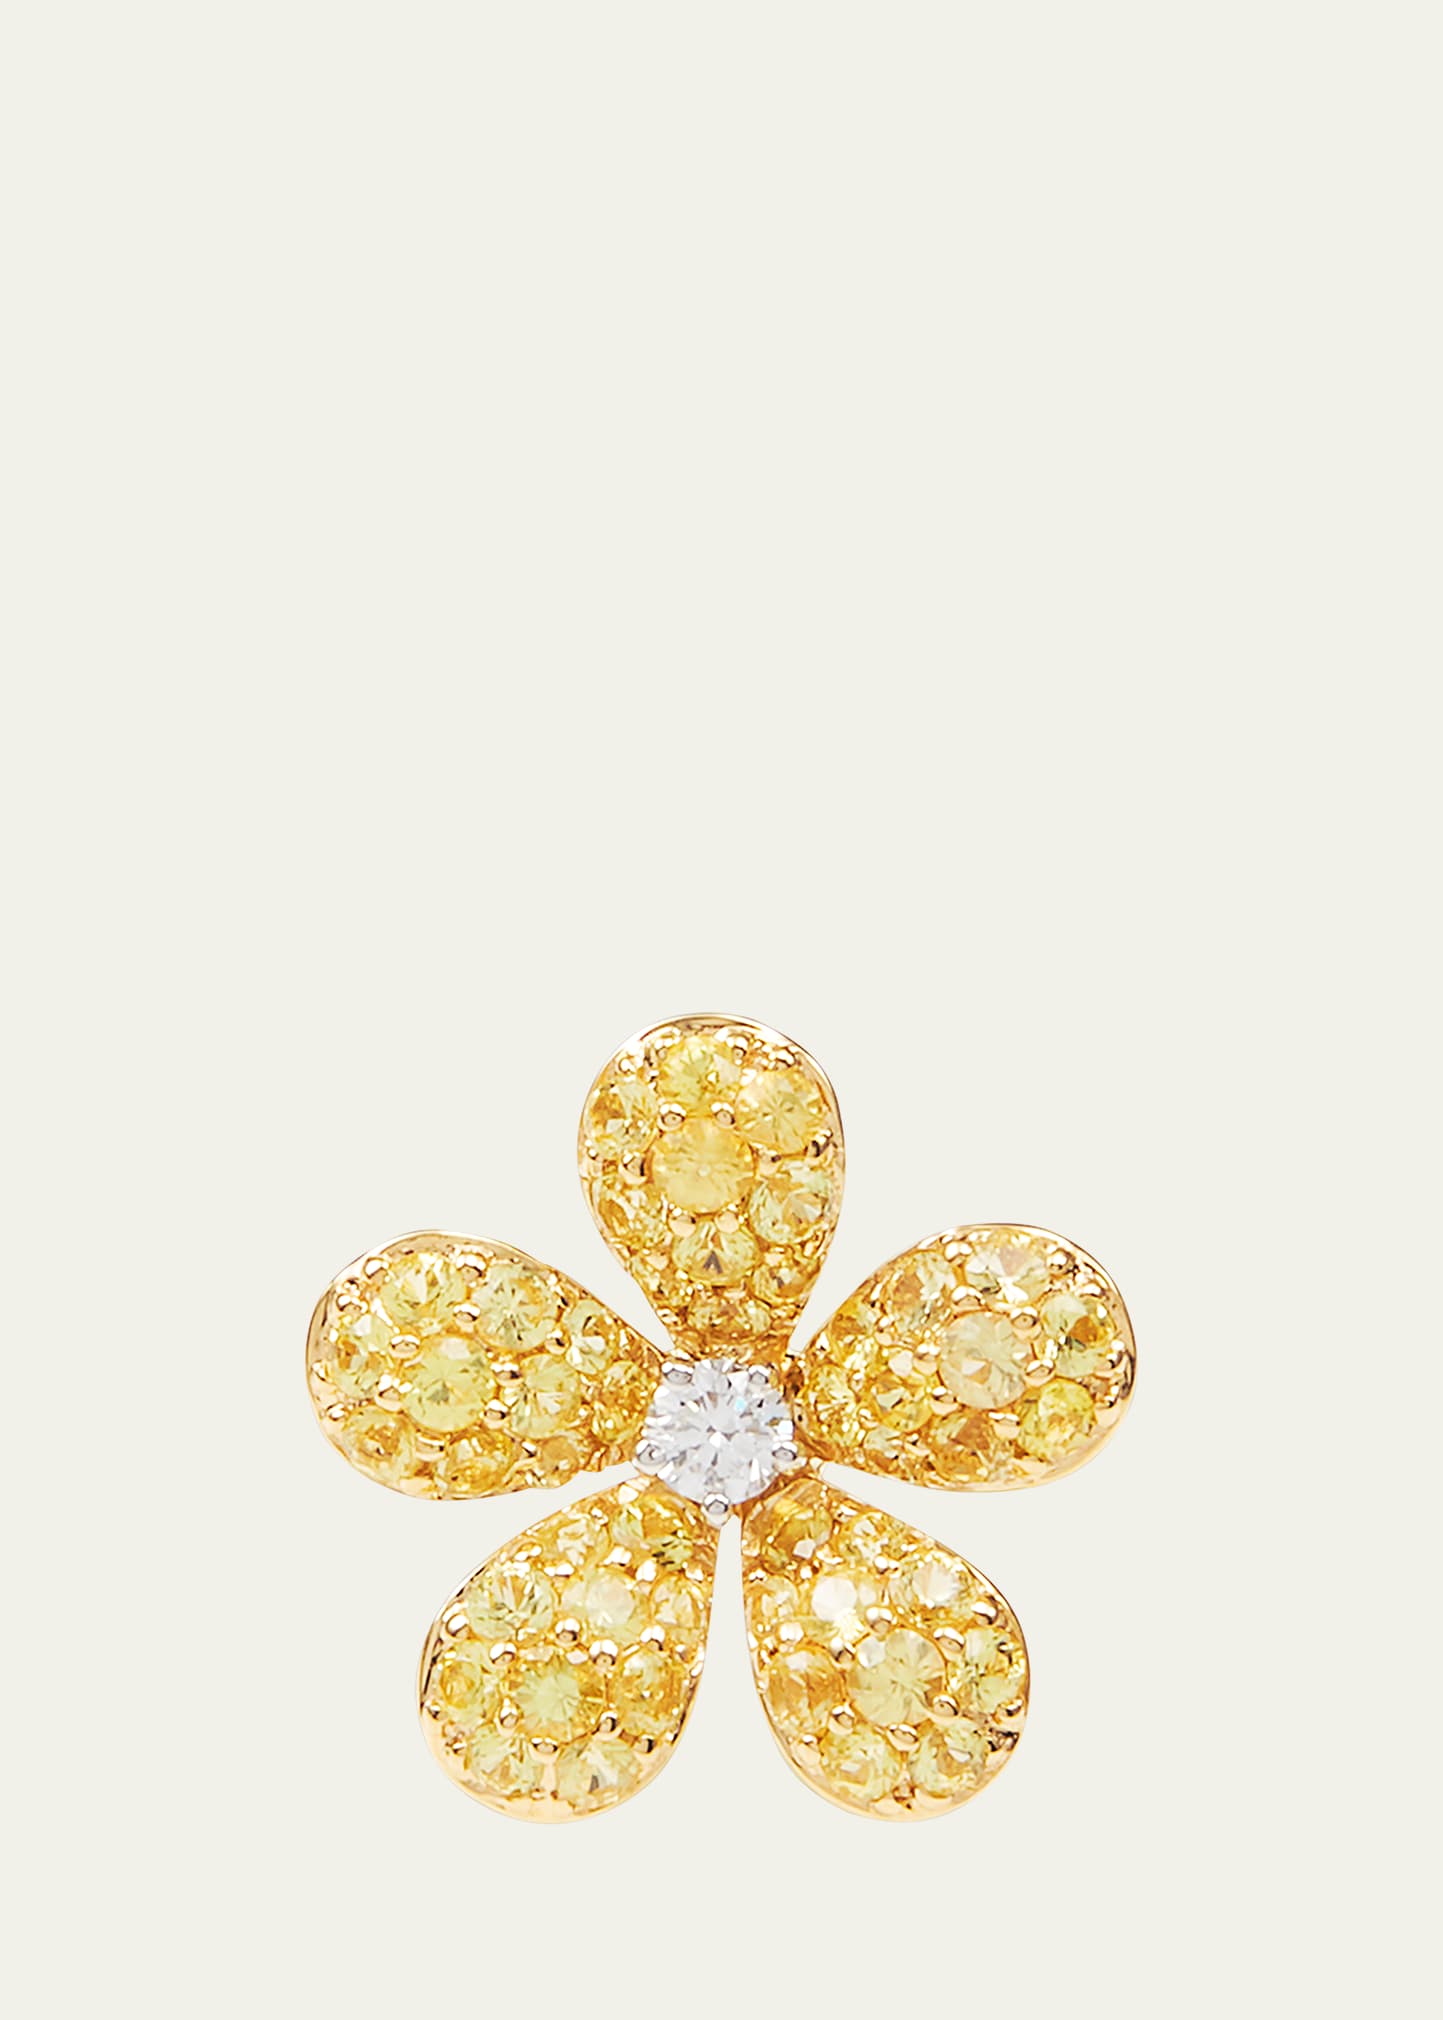 Mio Harutaka 18k Yellow Gold Flower Single Earring With Yellow Sapphire And Diamond